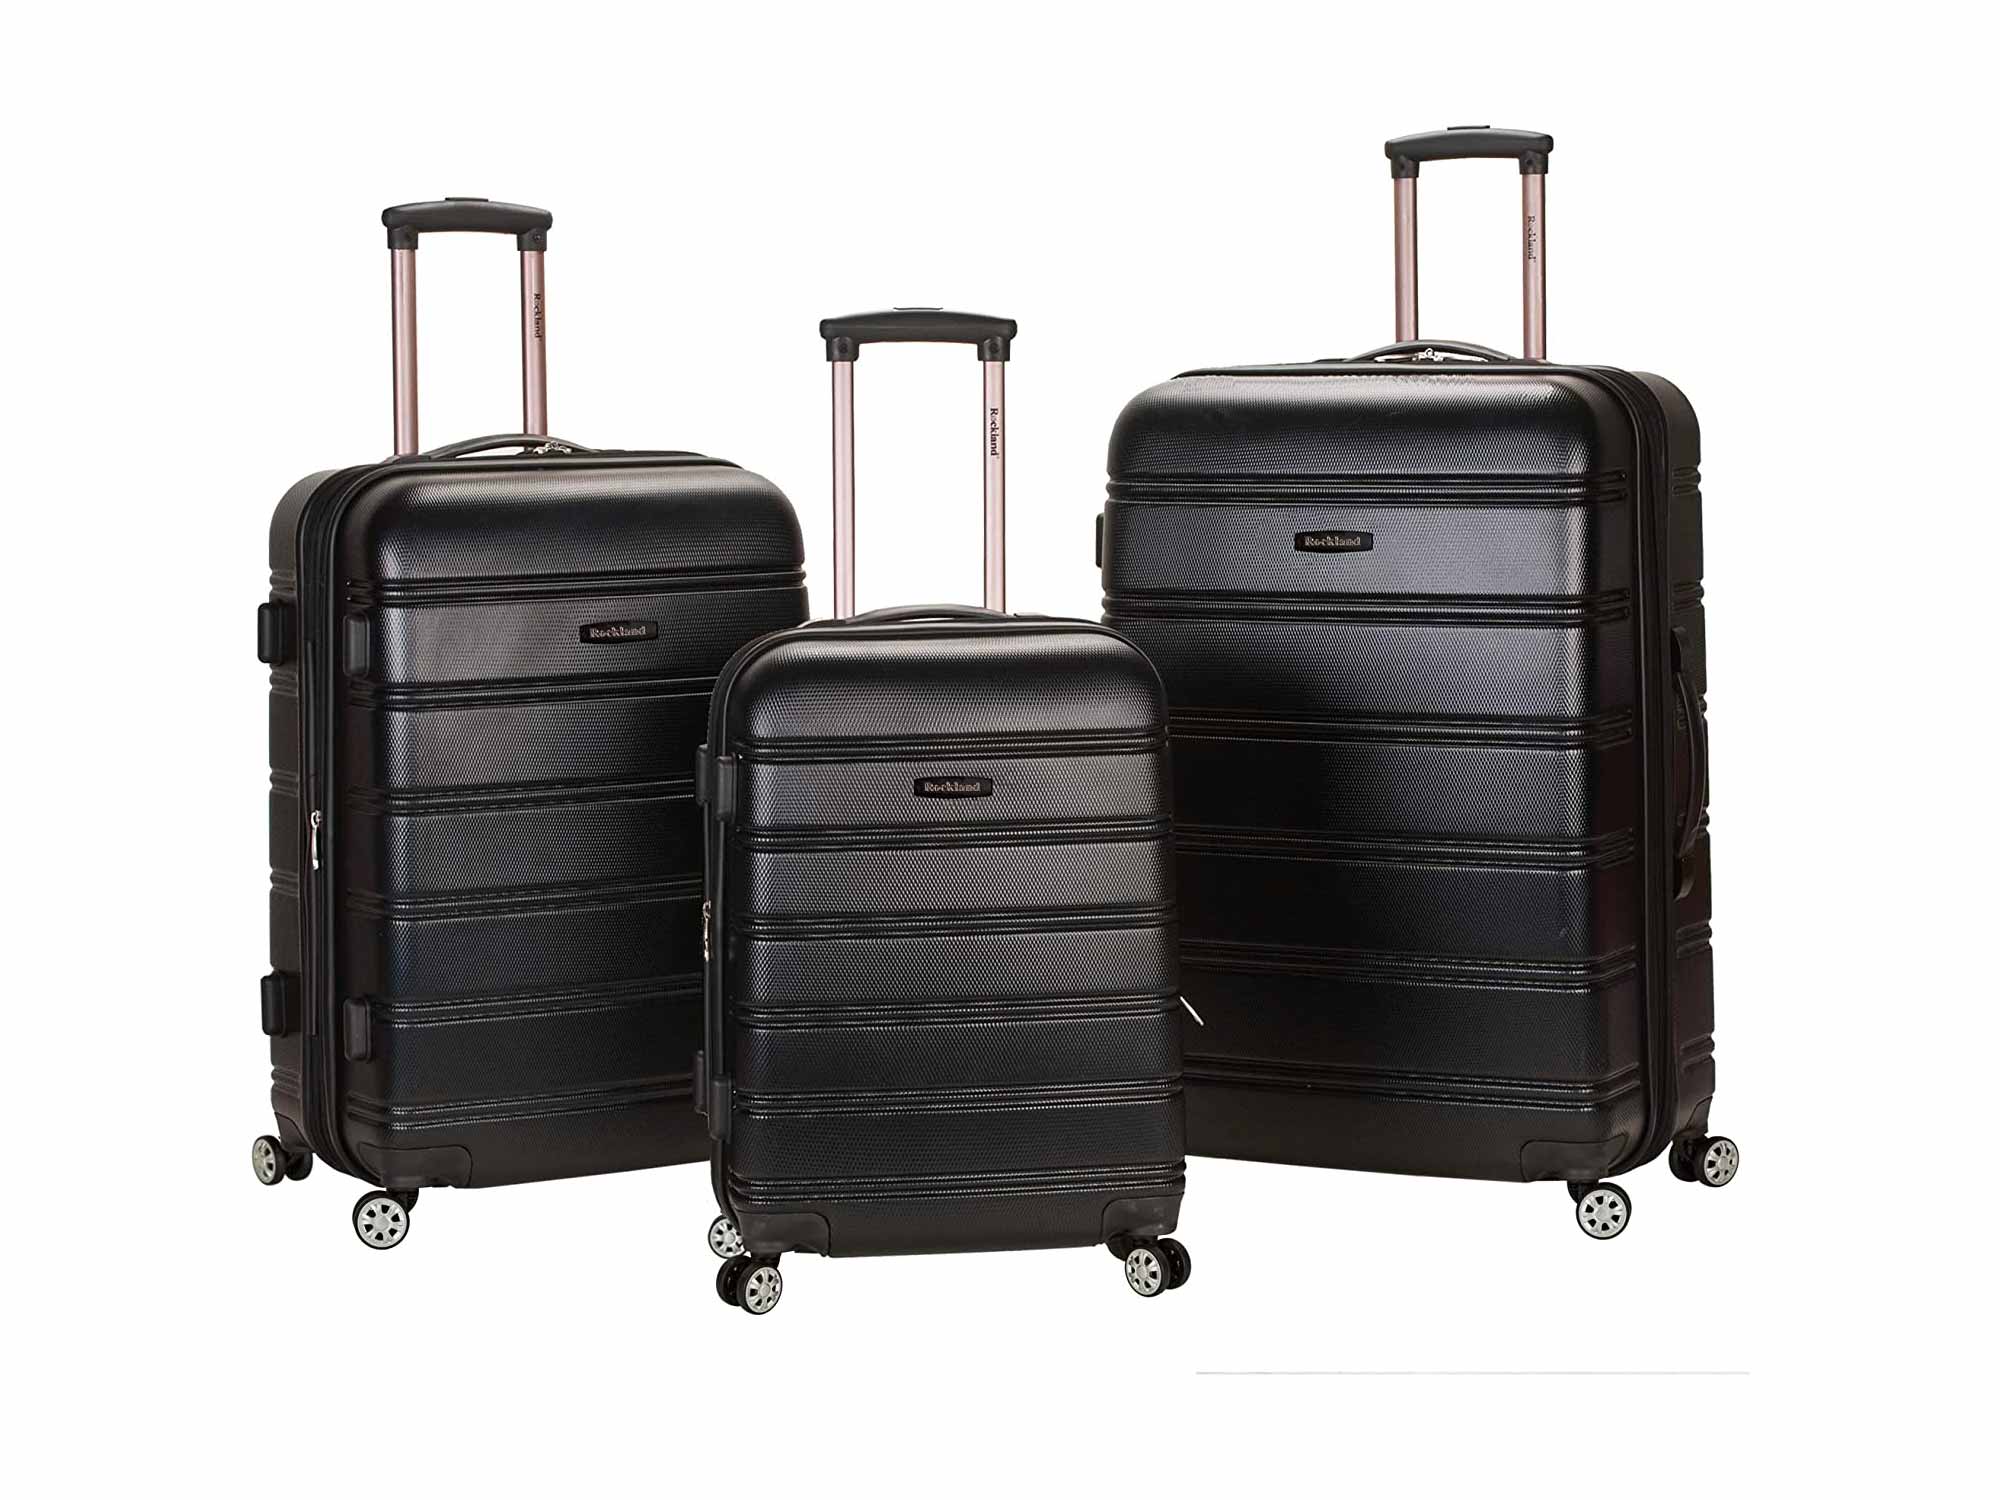 Rockland Melbourne Hardside Expandable Spinner Wheel Luggage, Black, 3-Piece Set